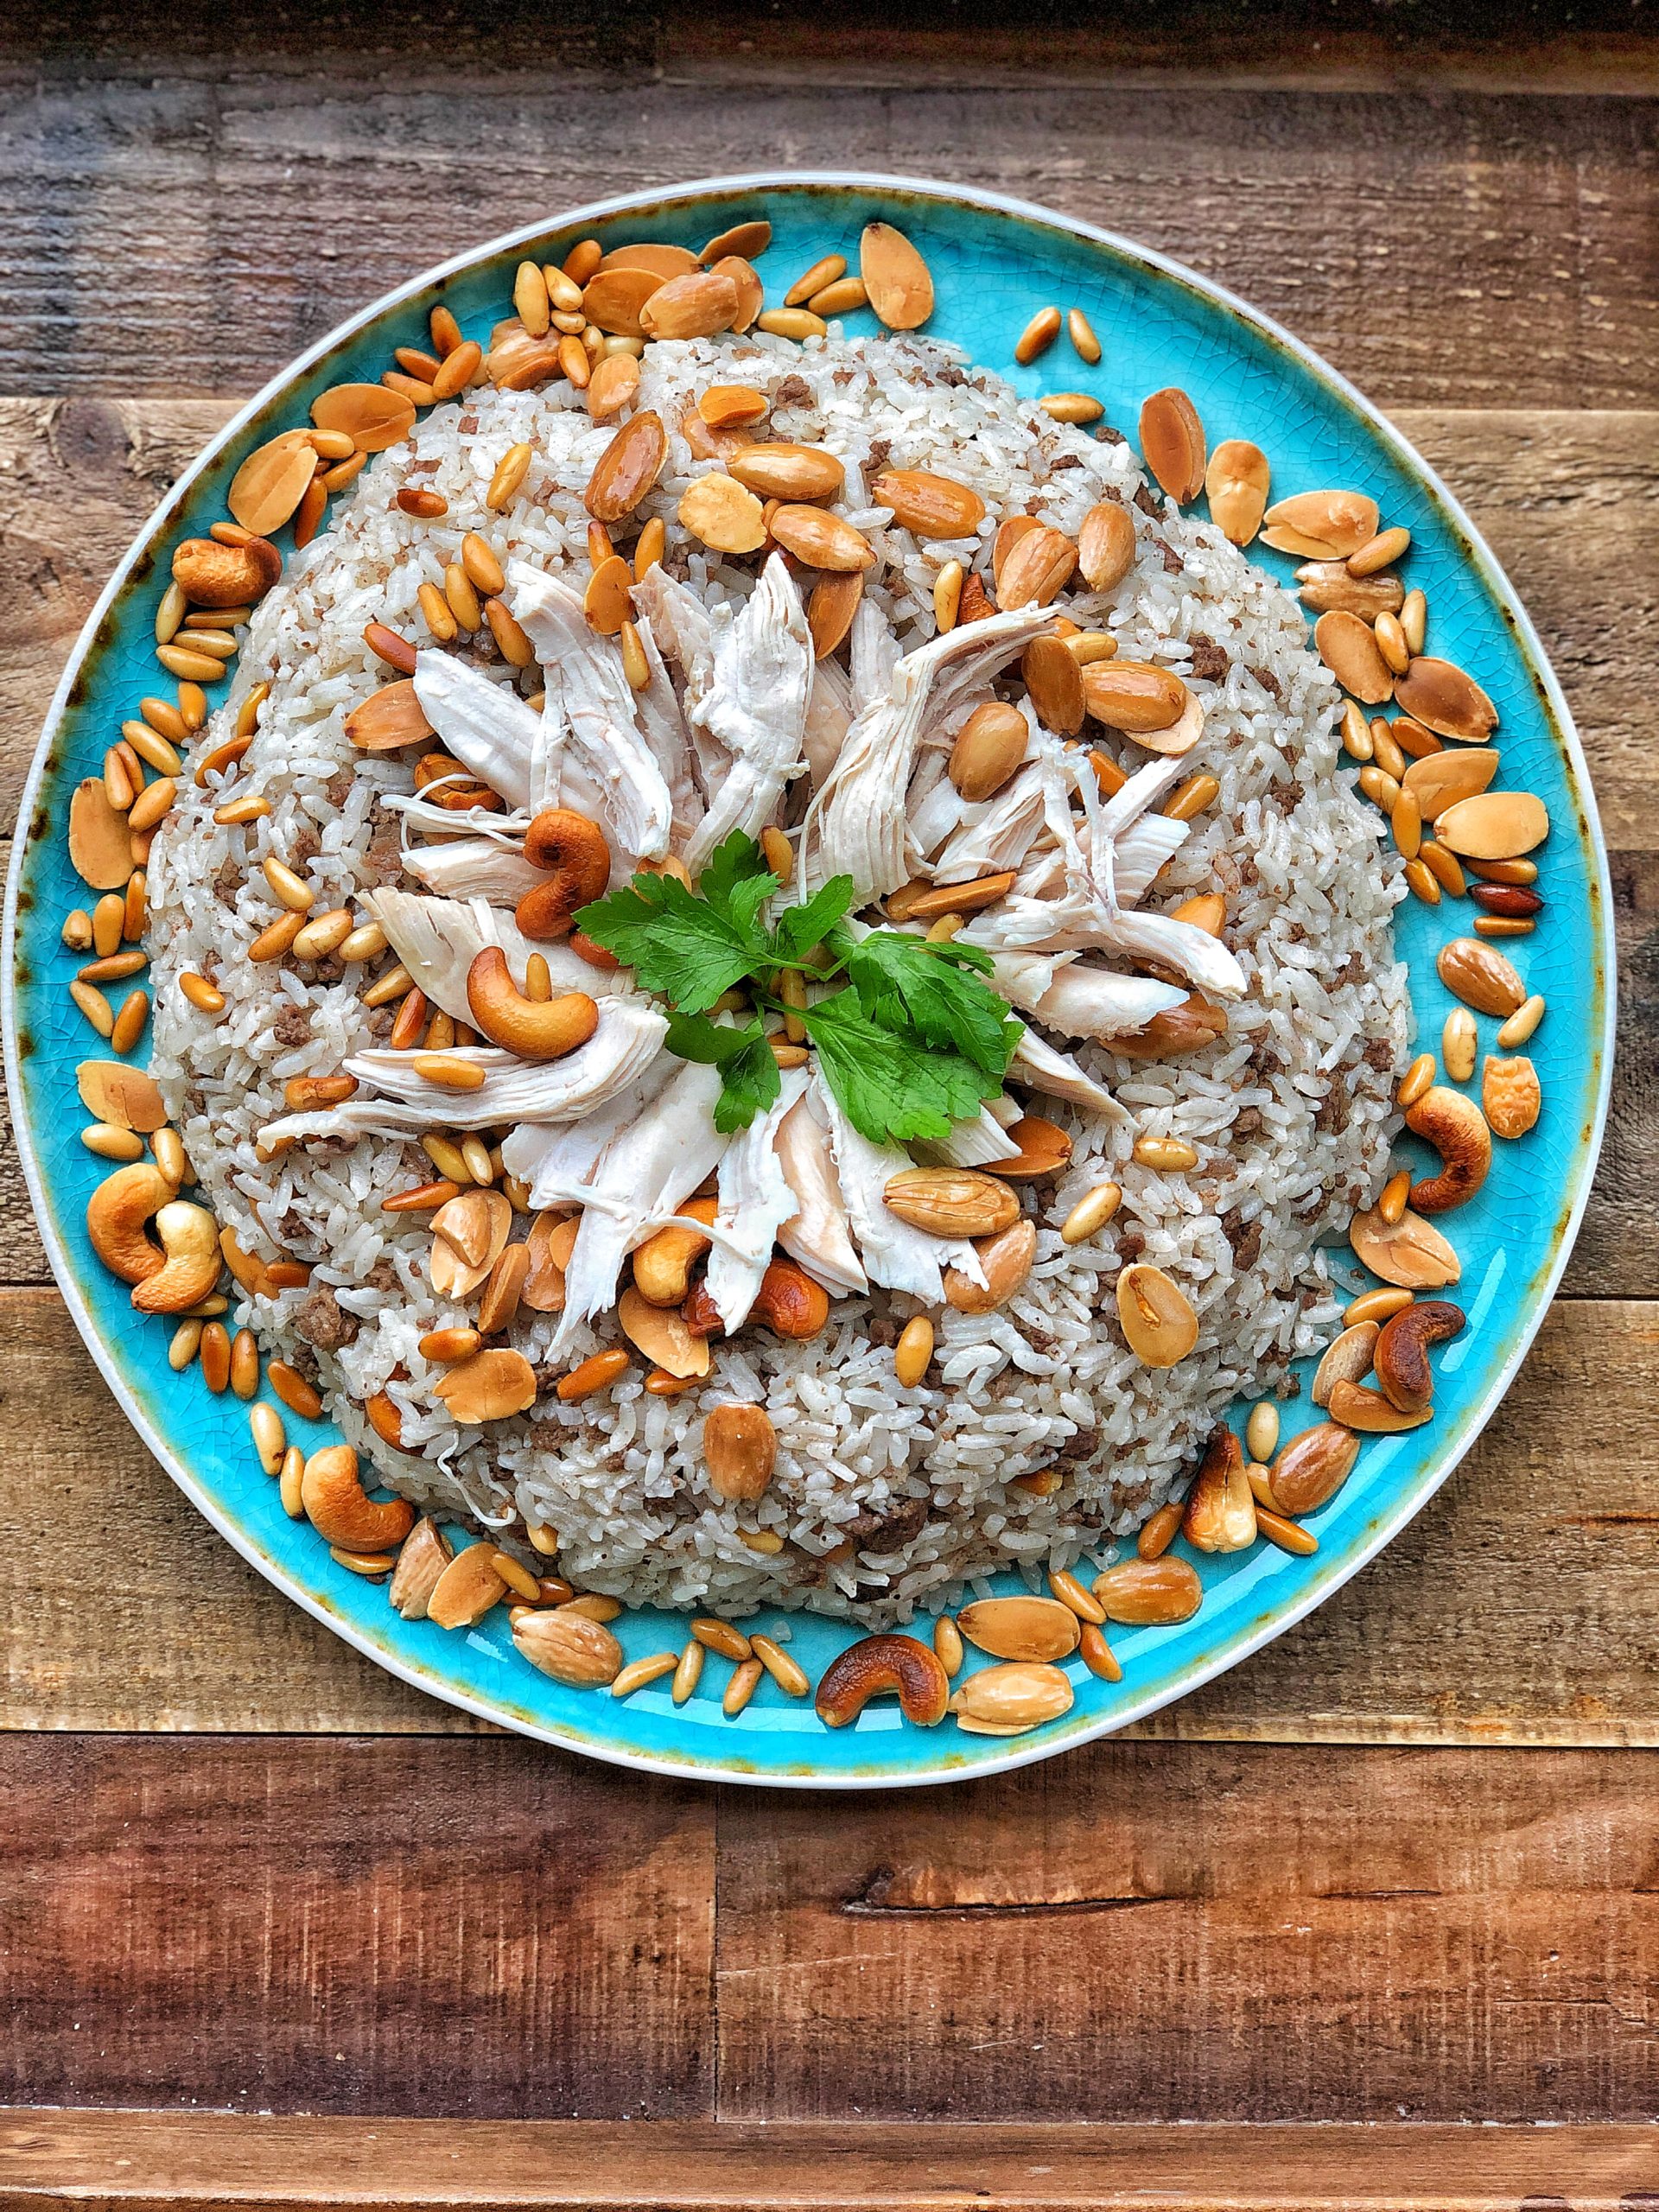 Lebanese Rice and Chicken aka Riz 3a Djej